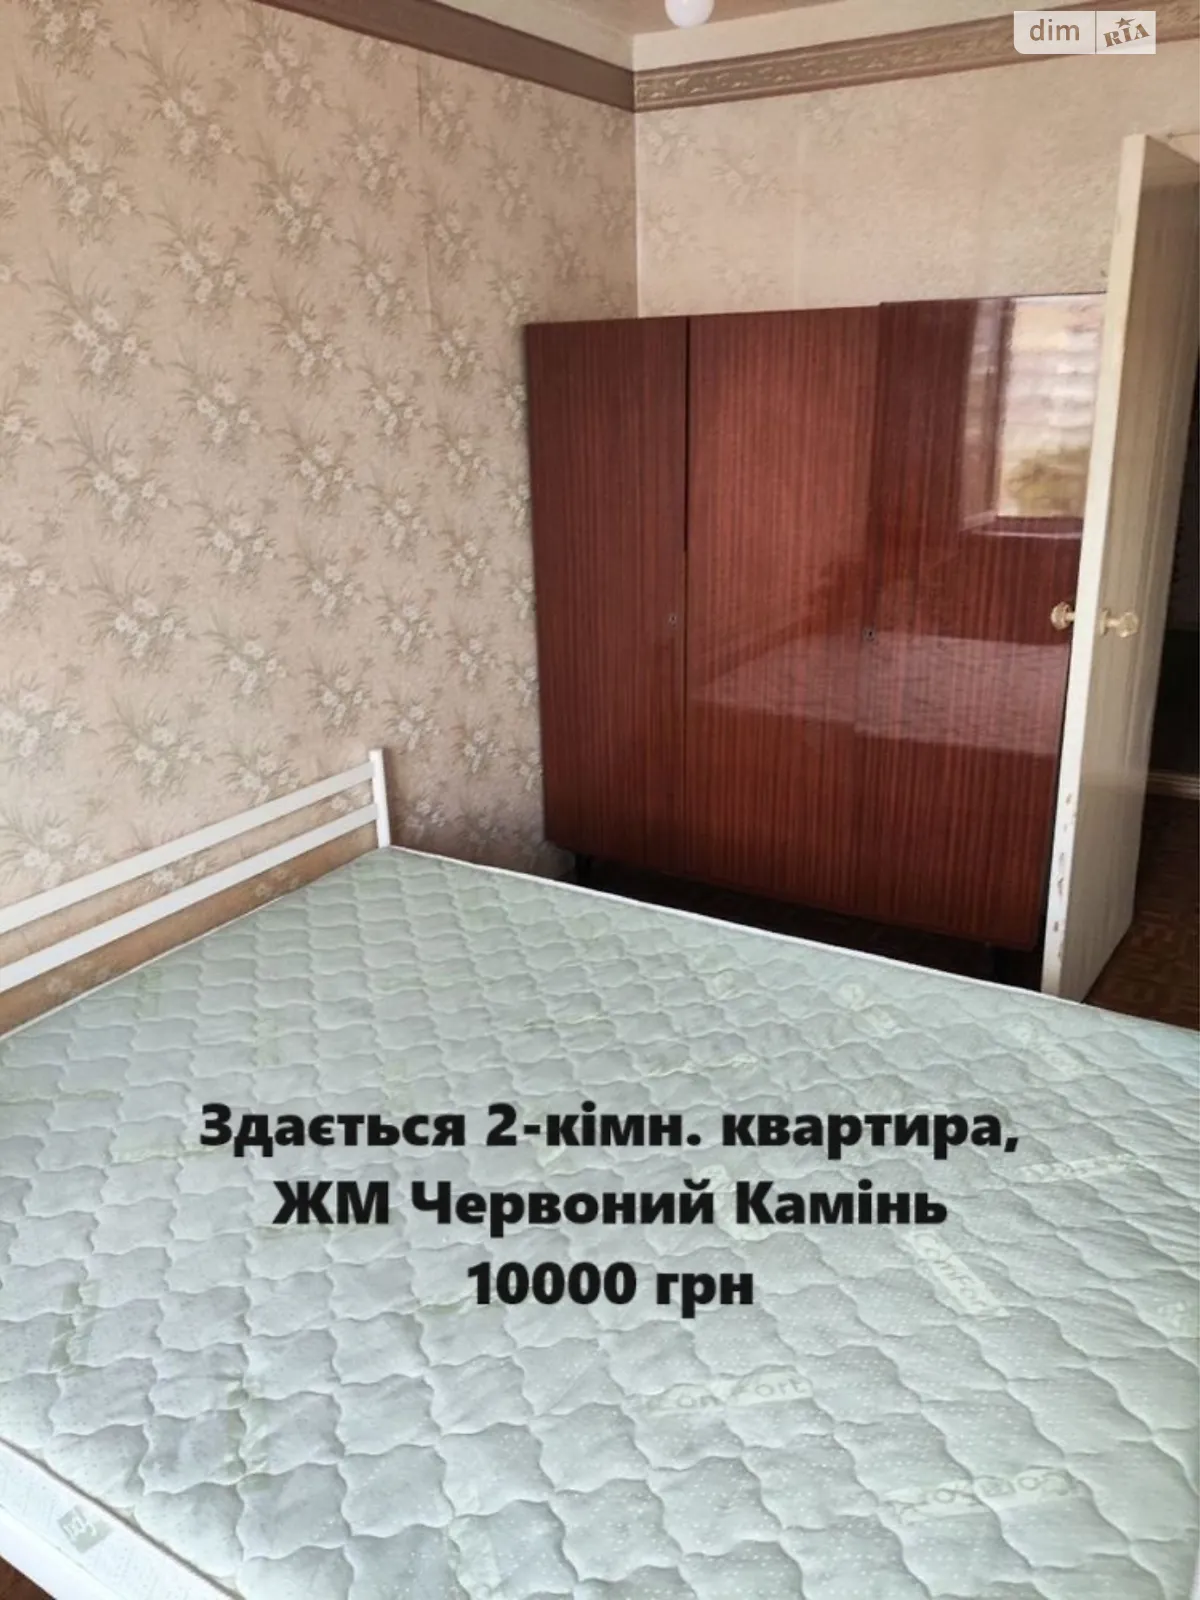 Сдается в аренду 2-комнатная квартира 47 кв. м в Днепре, ул. Кондратюка Юрия - фото 1